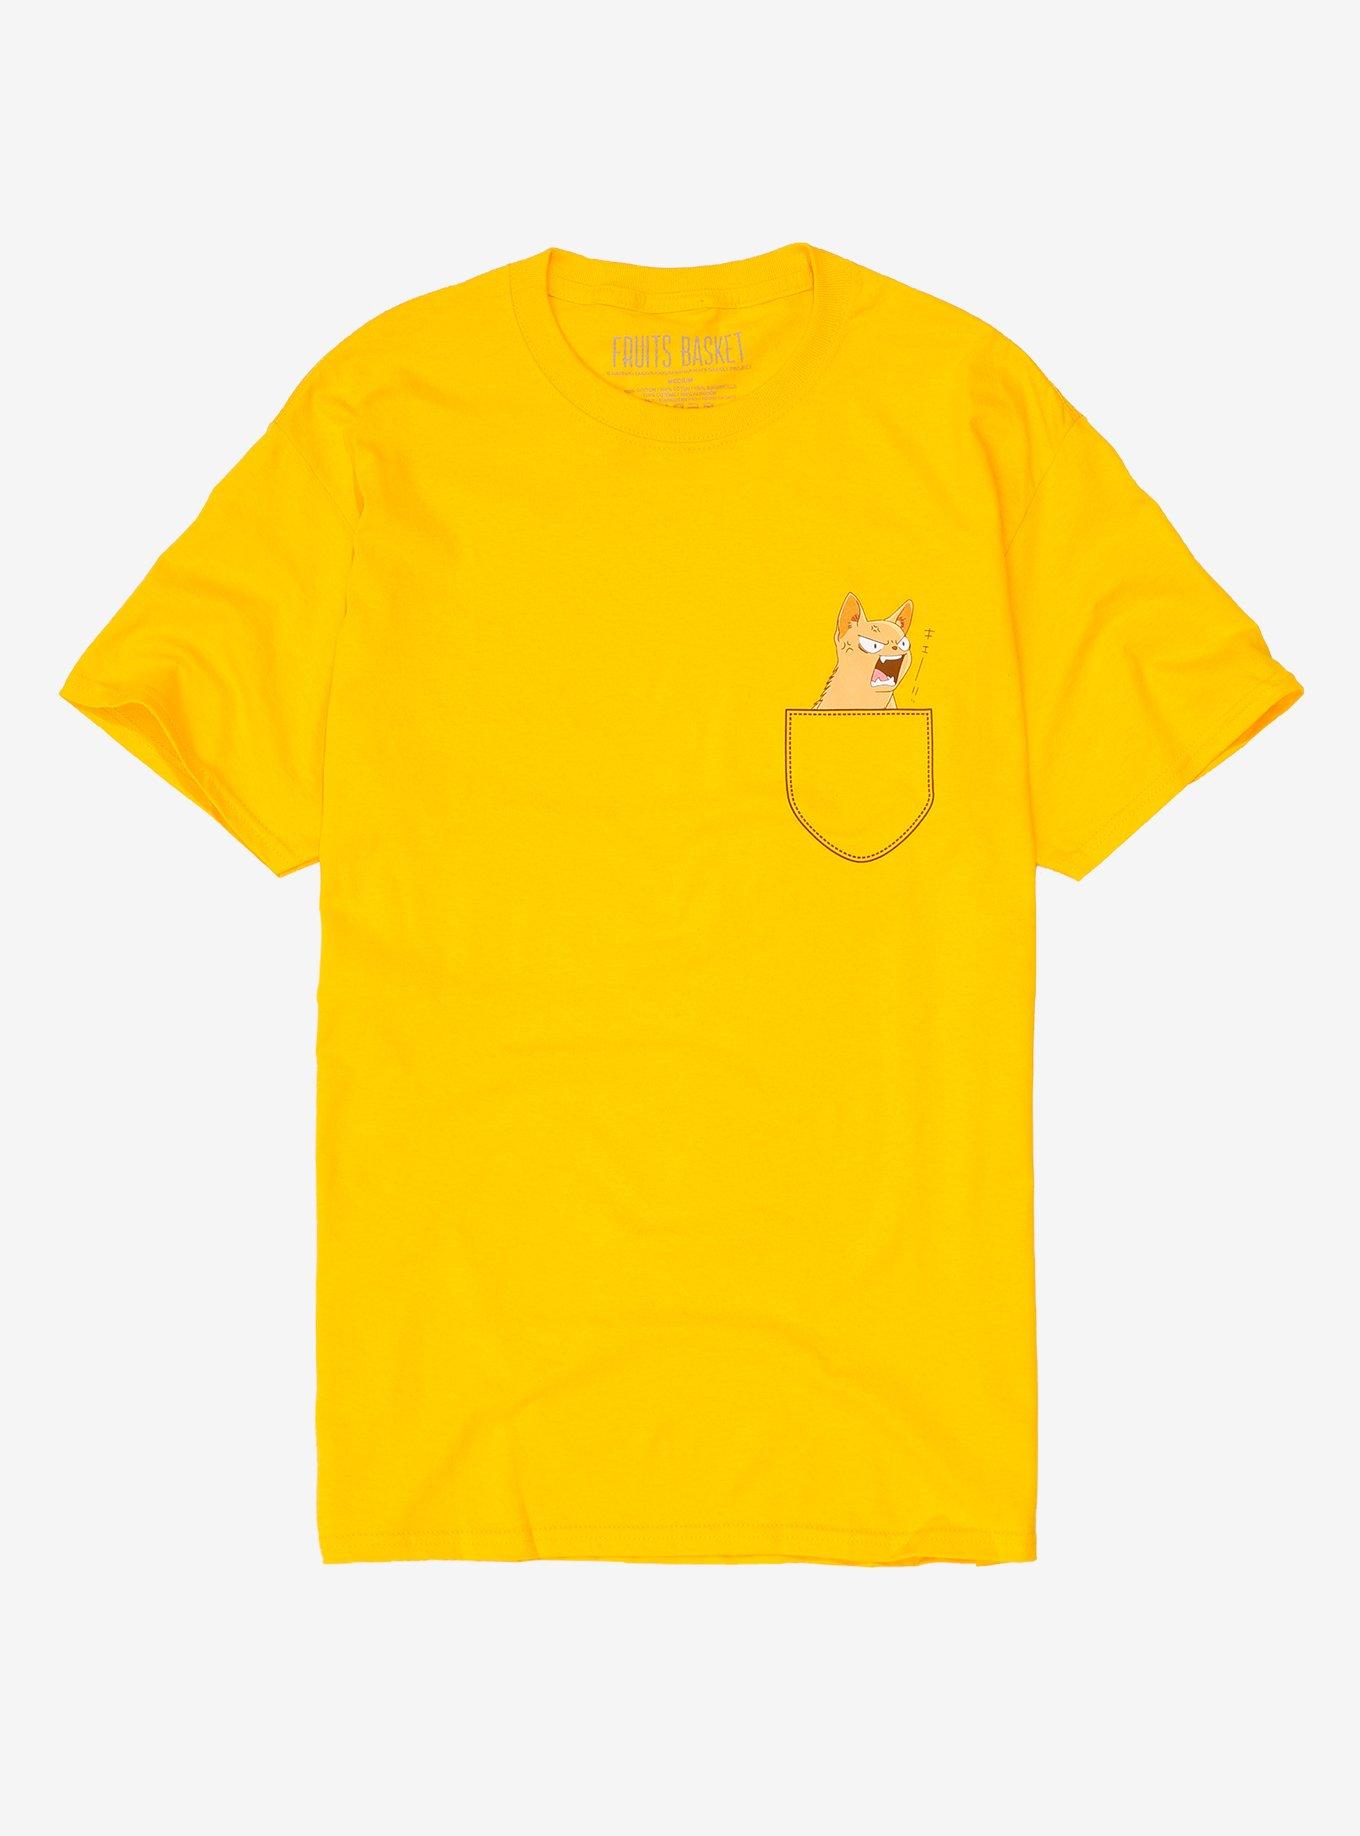 Fruits Basket Kyo Pocket T-Shirt, GOLDEN YELLOW, hi-res